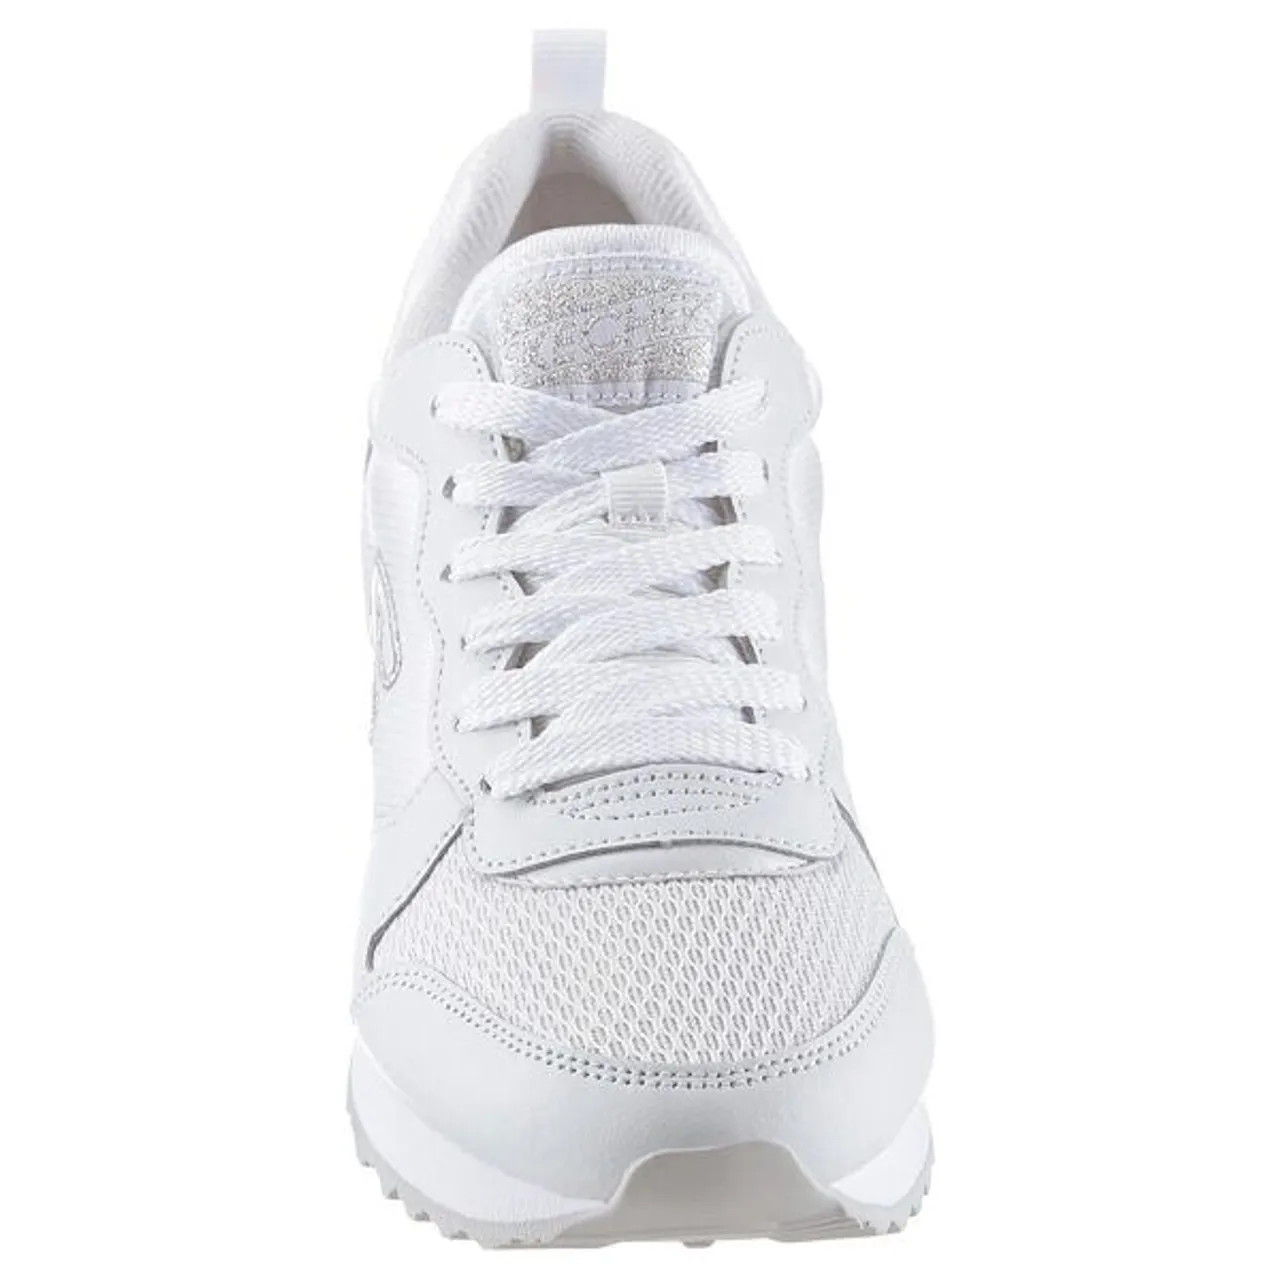 Sneaker SKECHERS "Gold´n Gurl" Gr. 36, weiß (weiß, silberfarben) Damen Schuhe Modernsneaker Sneaker low Bestseller